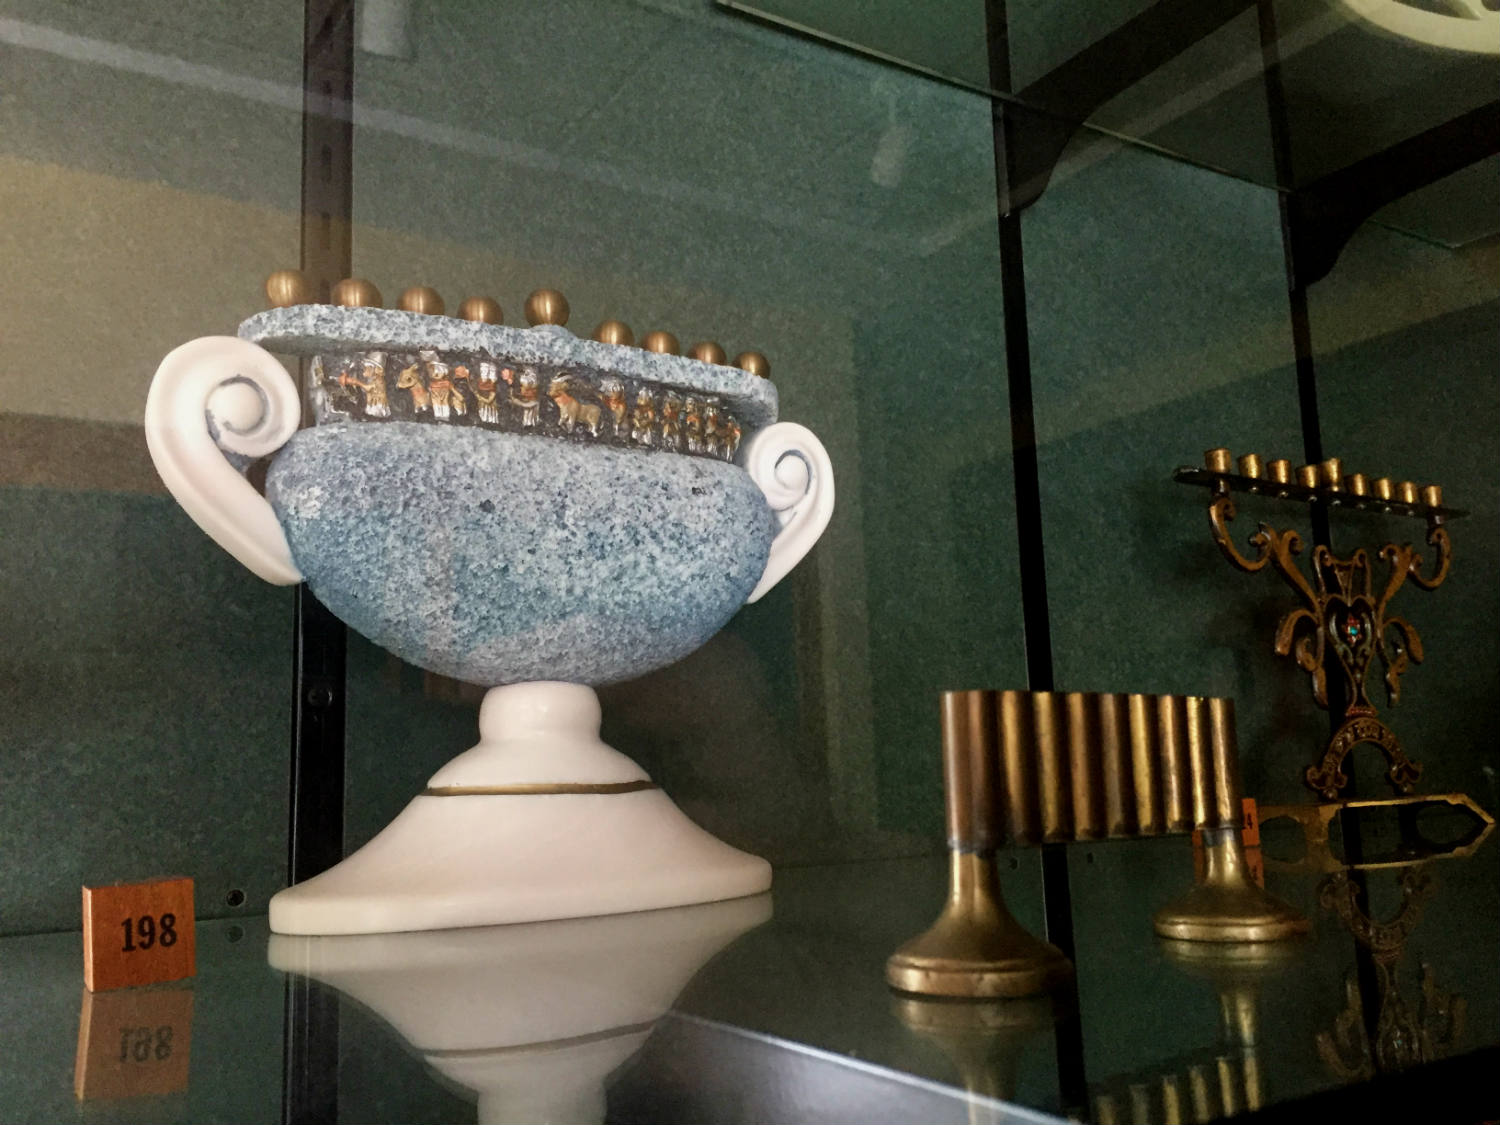 Vase Hanukkiah from Israel at Temple B'rith Kodesh in Rochester, New York